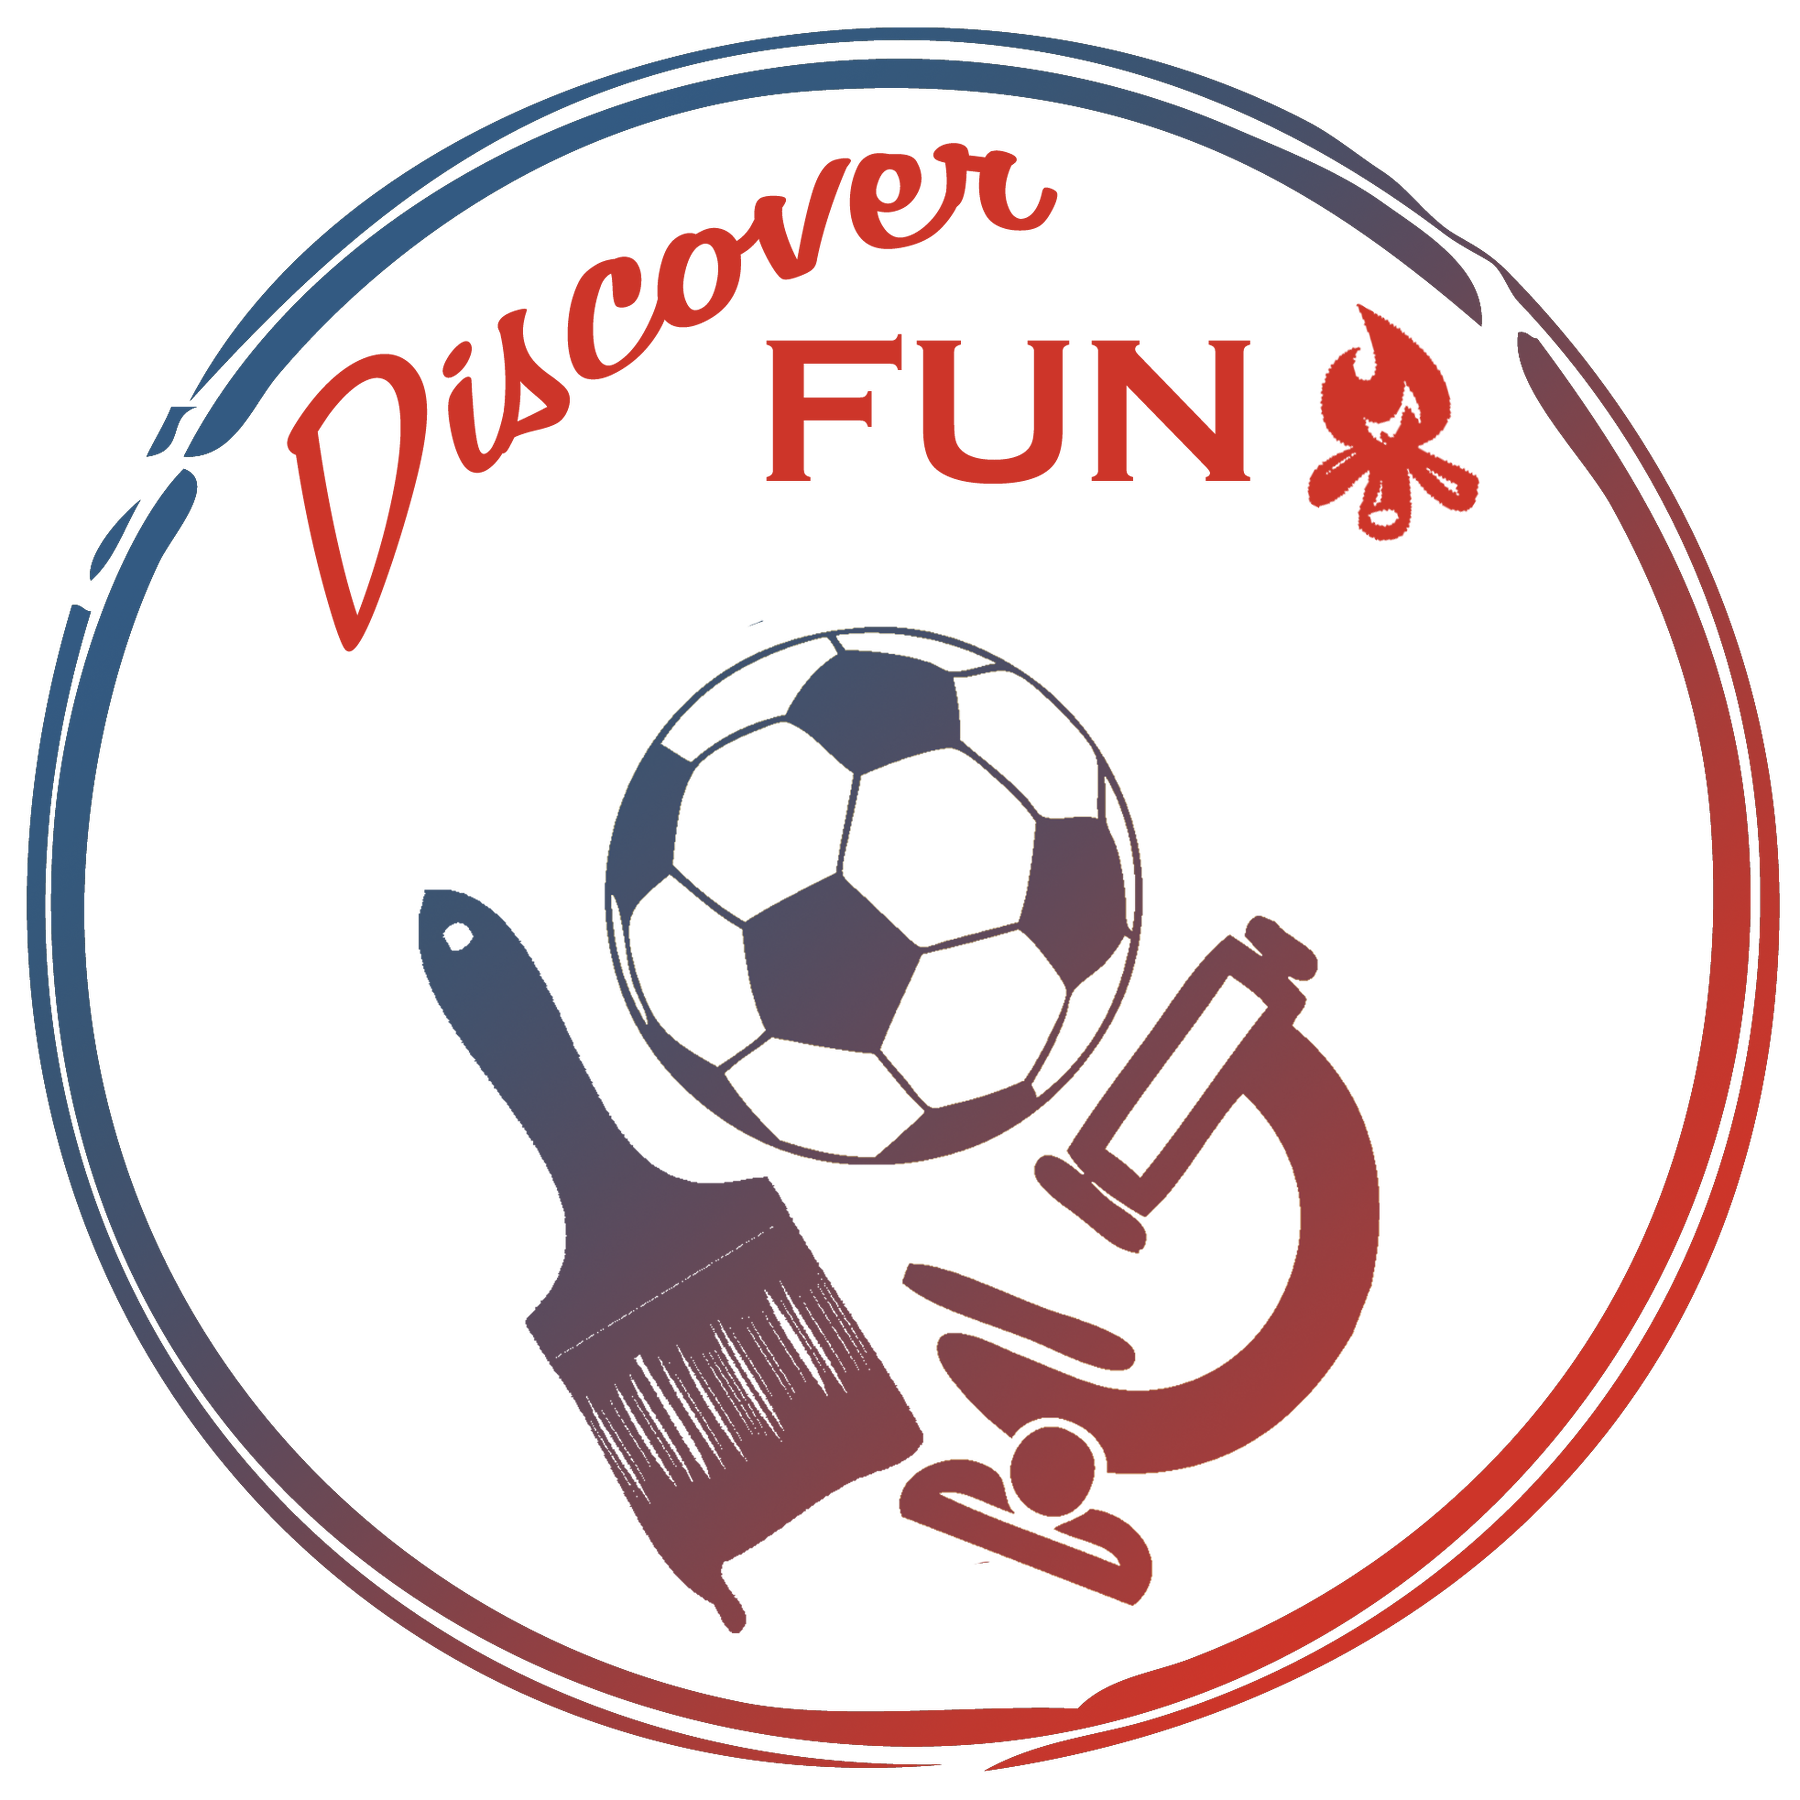 discover fun